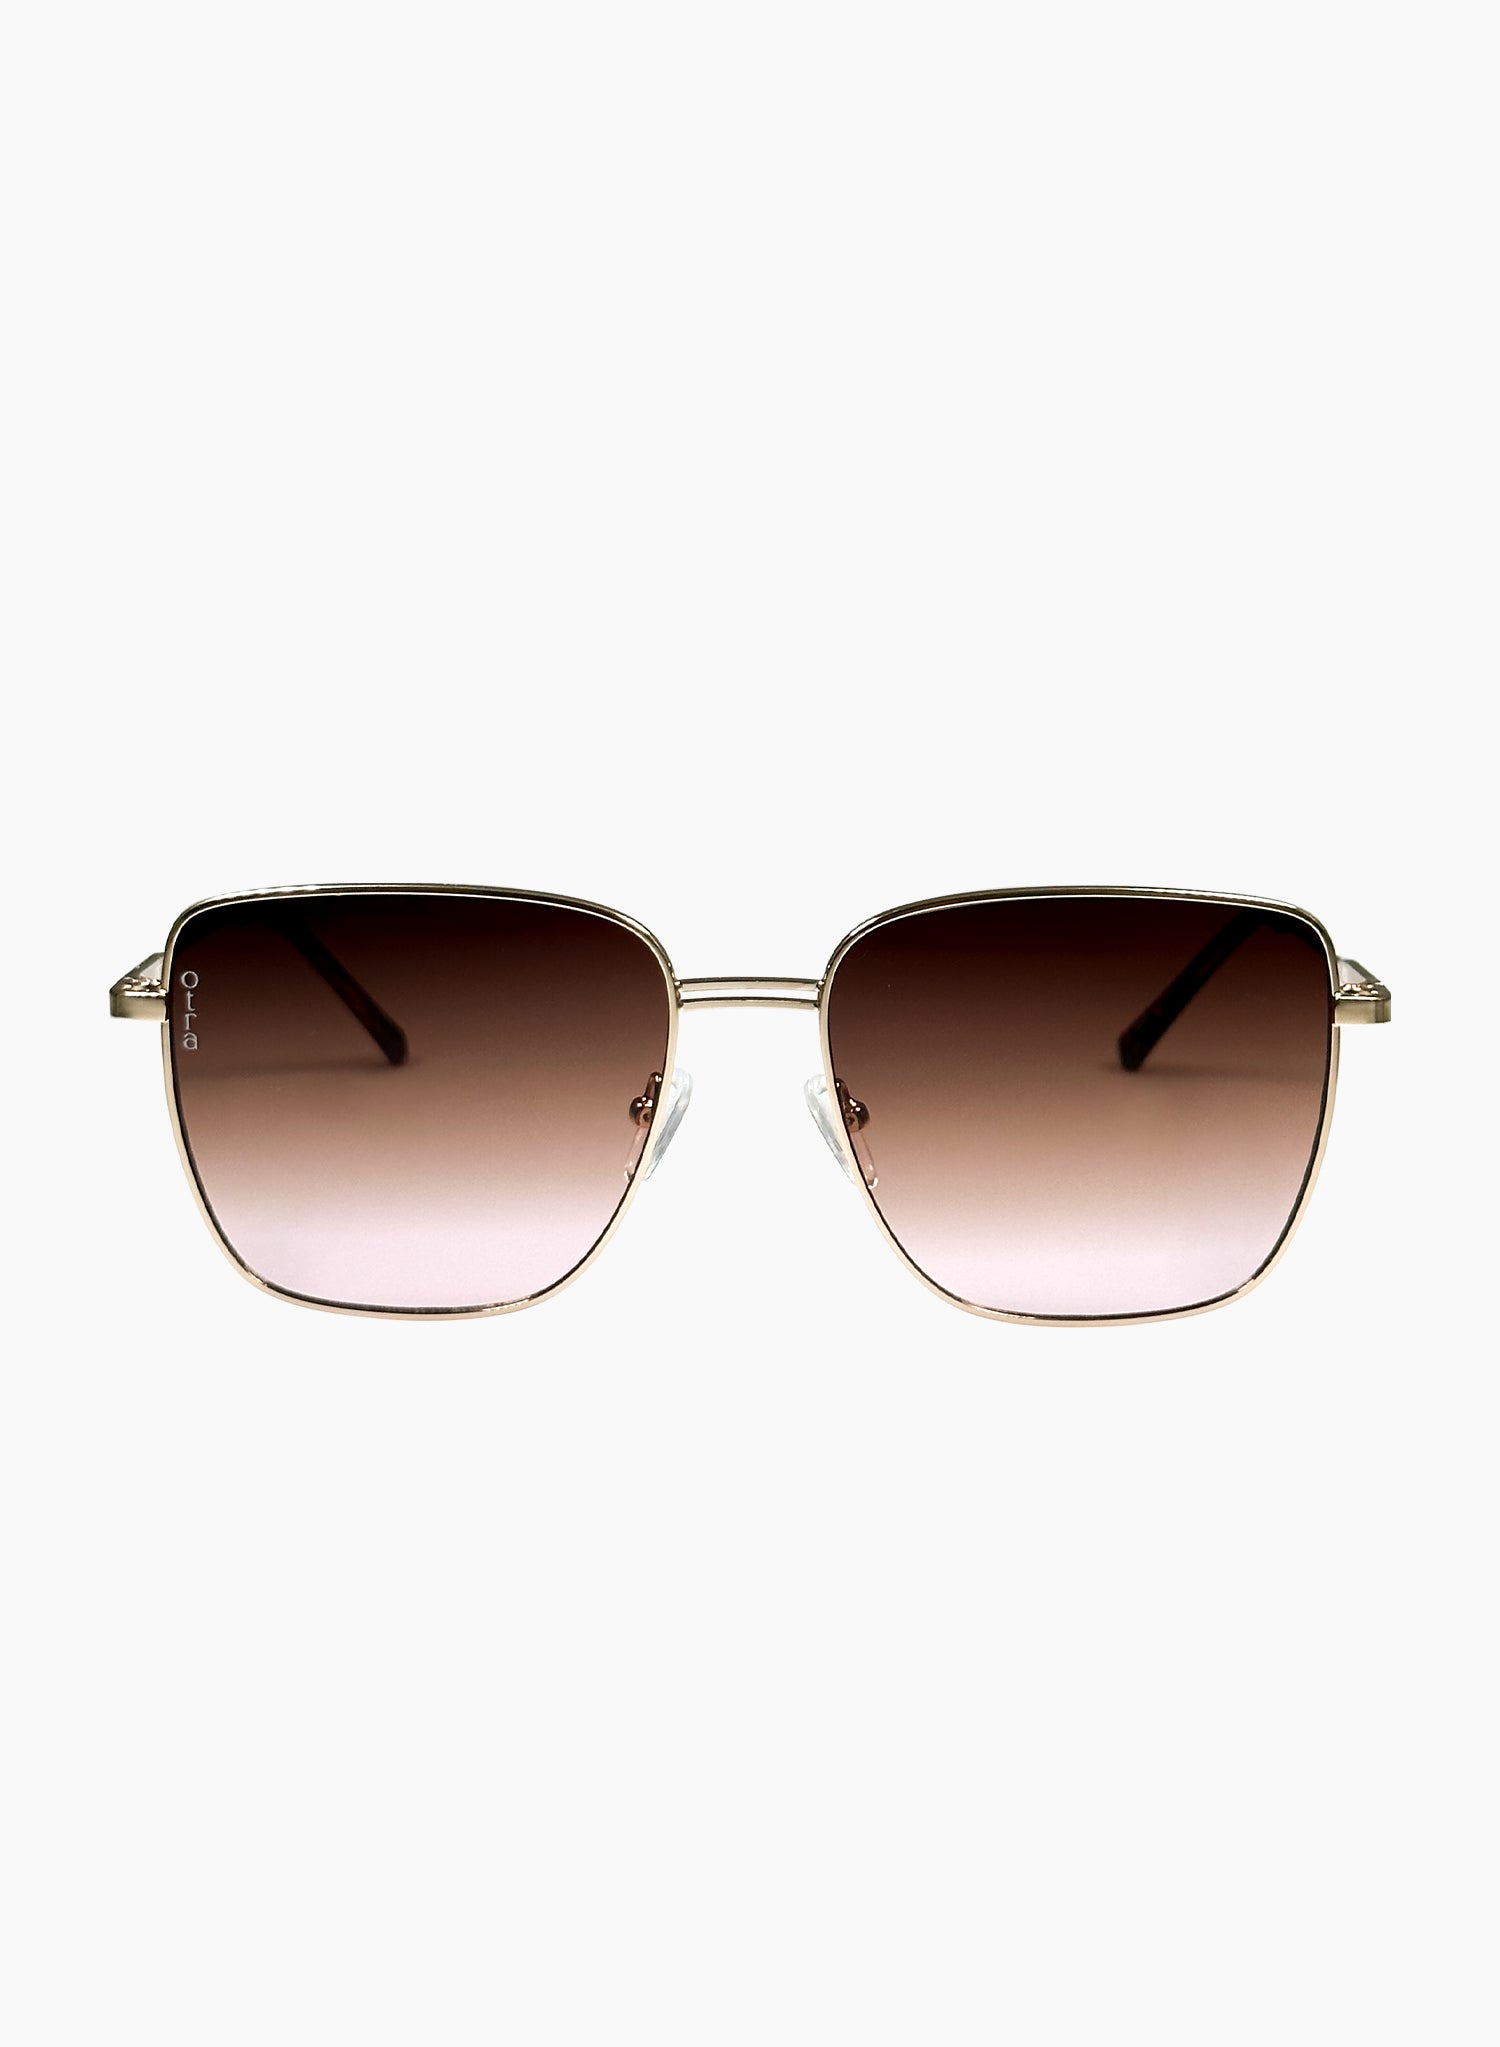 Rita oversized rectangle sunglasses in brown 